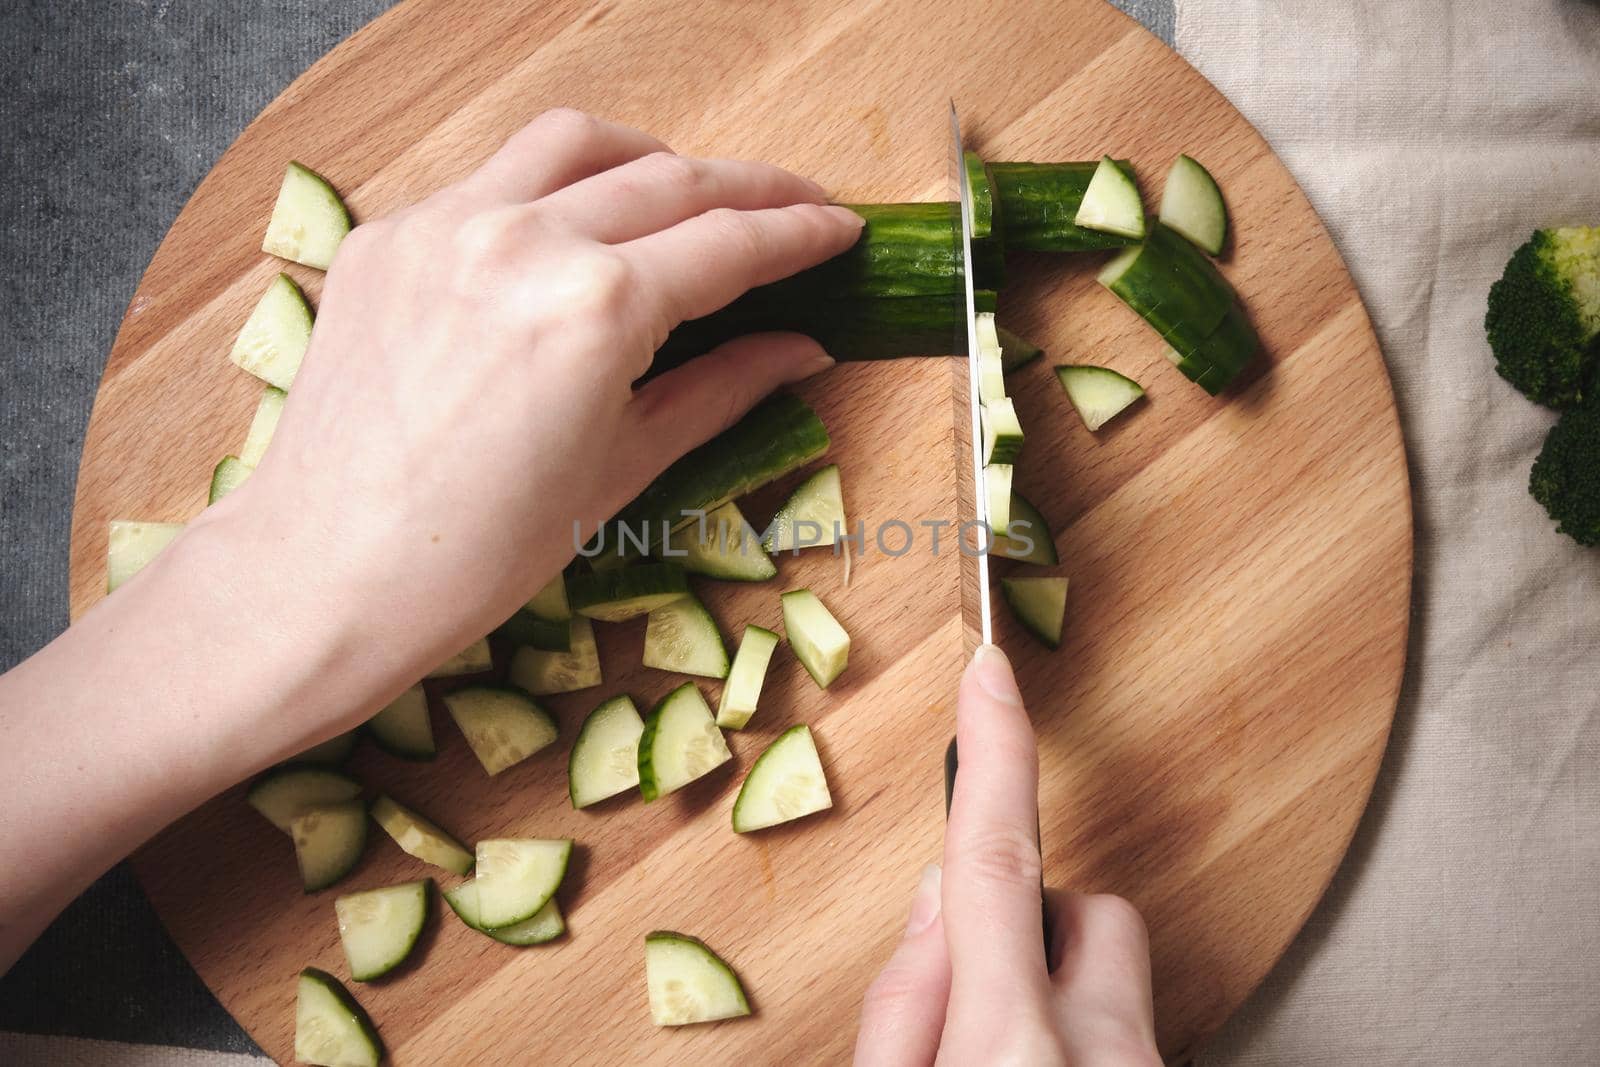 Chopping a cucumber on a cutting board